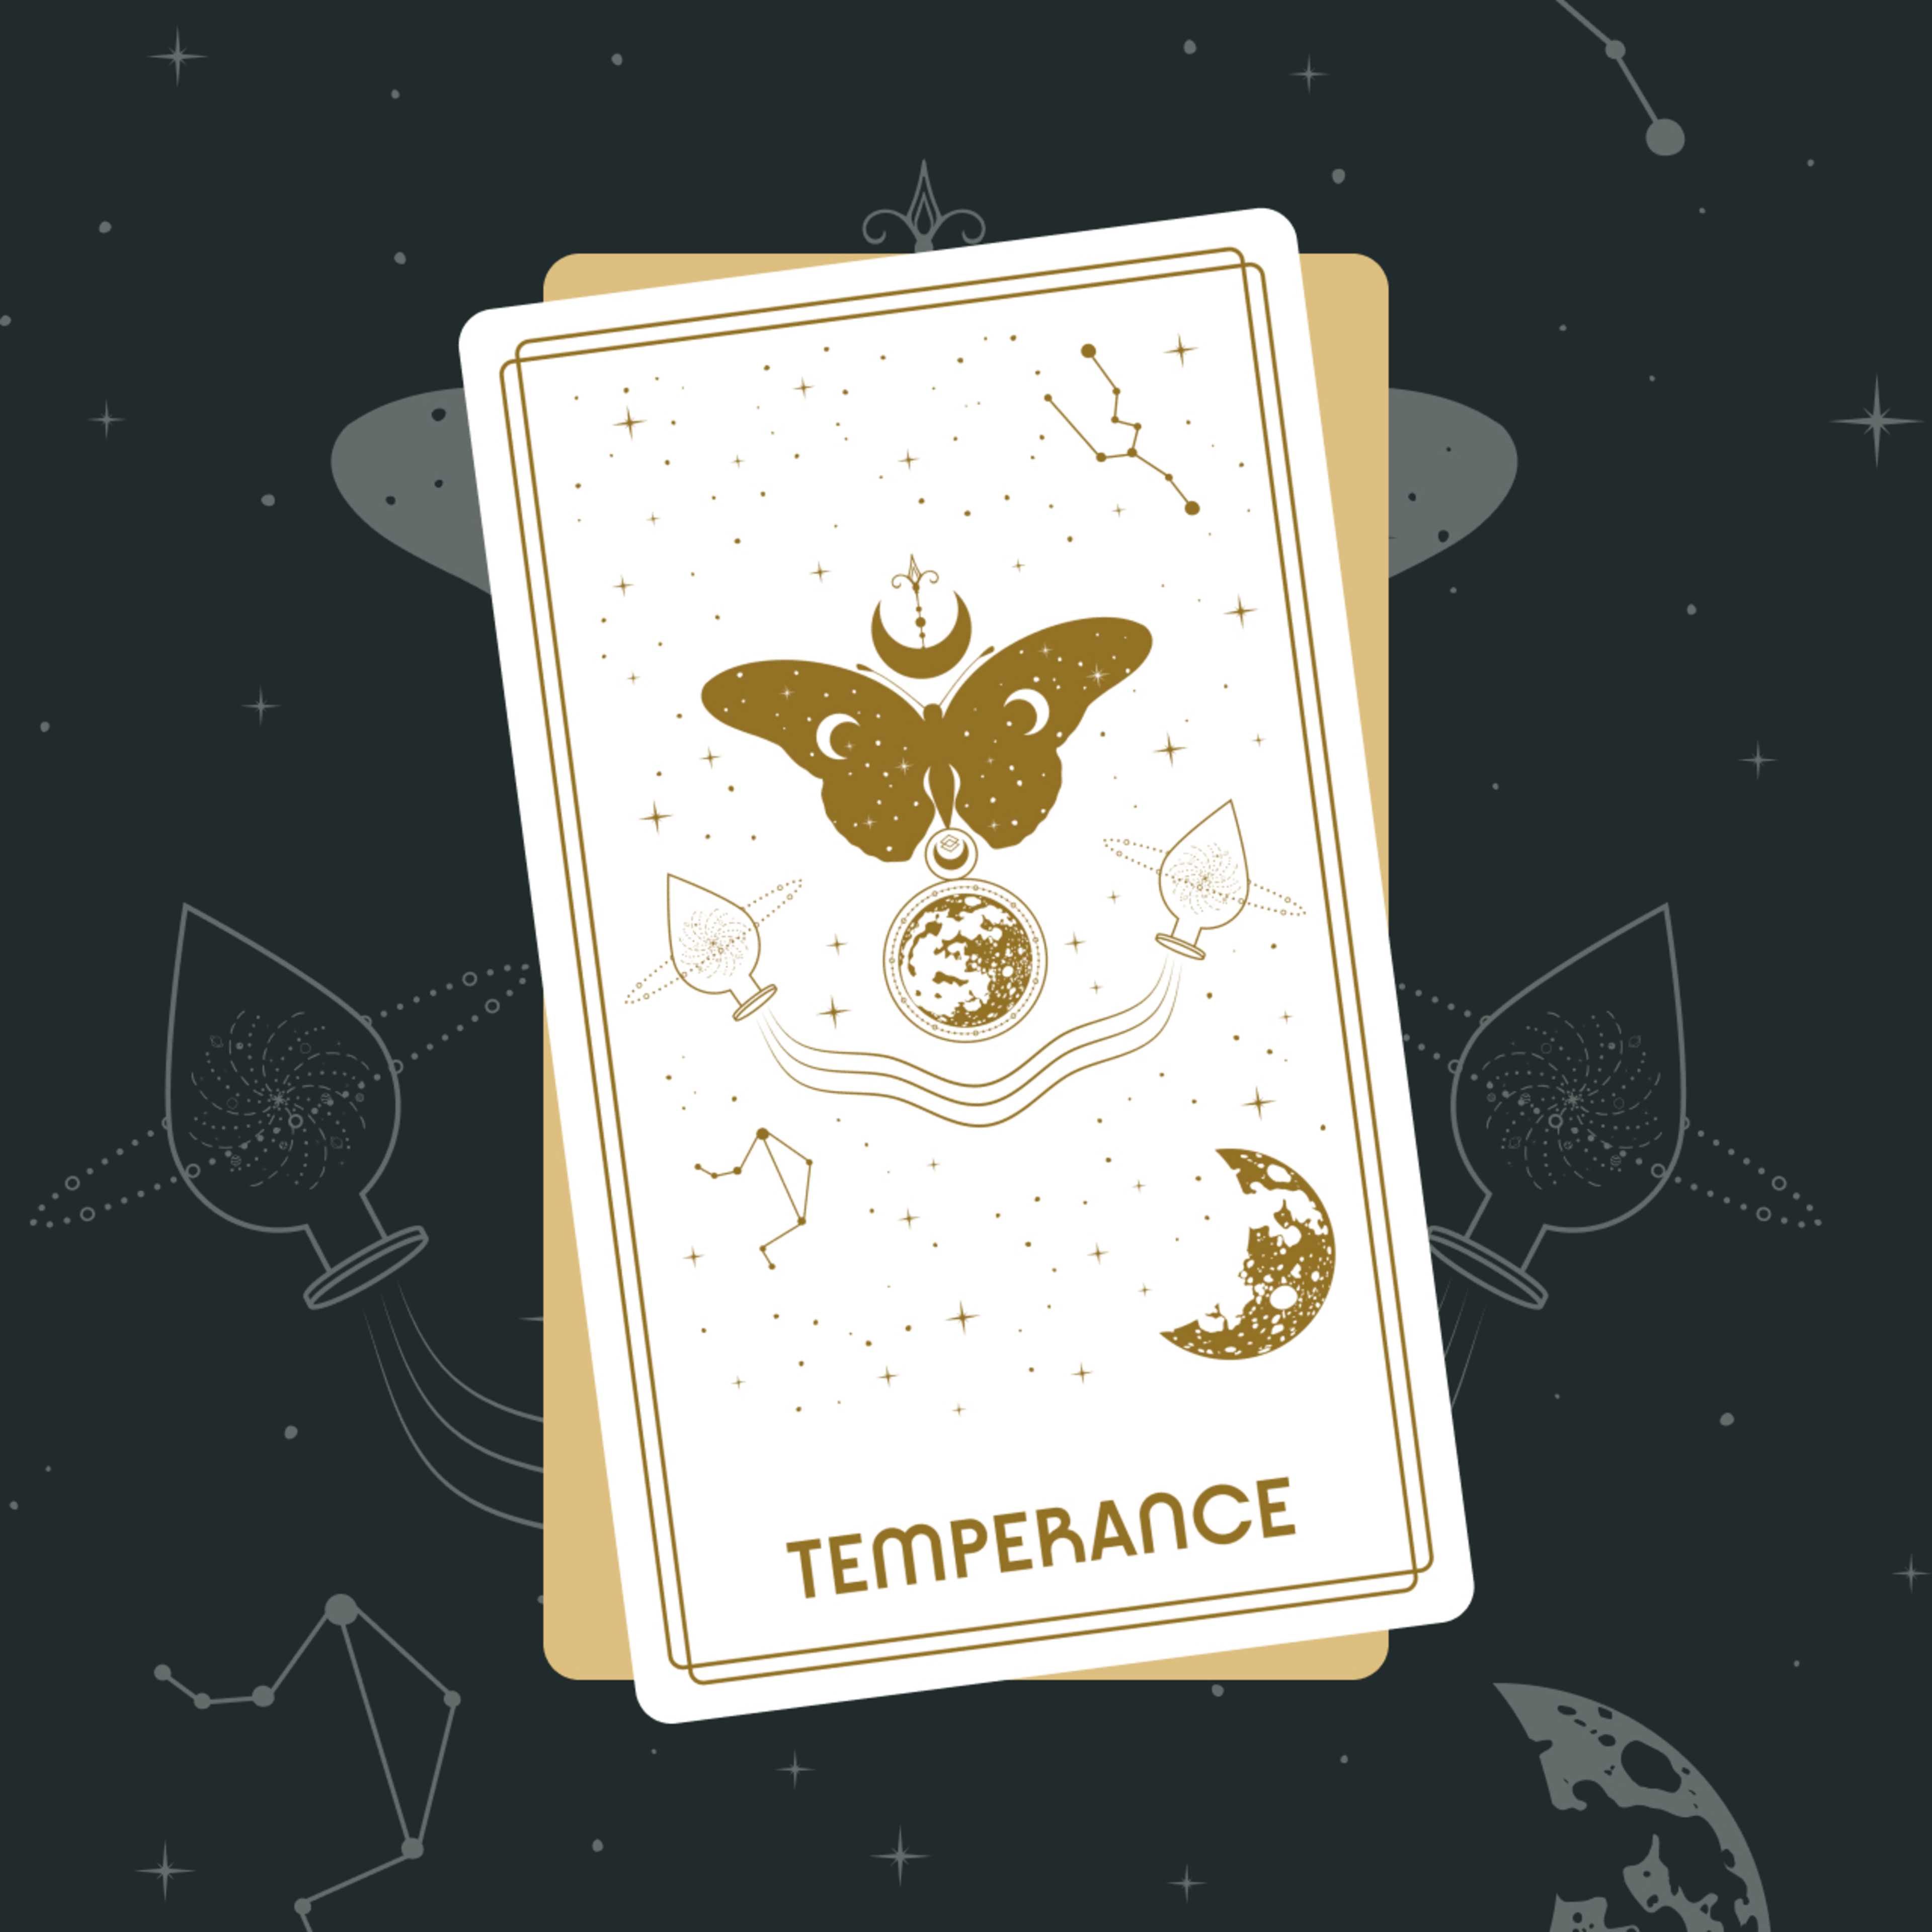 Temperance Tarot Card (Major Arcana #14)